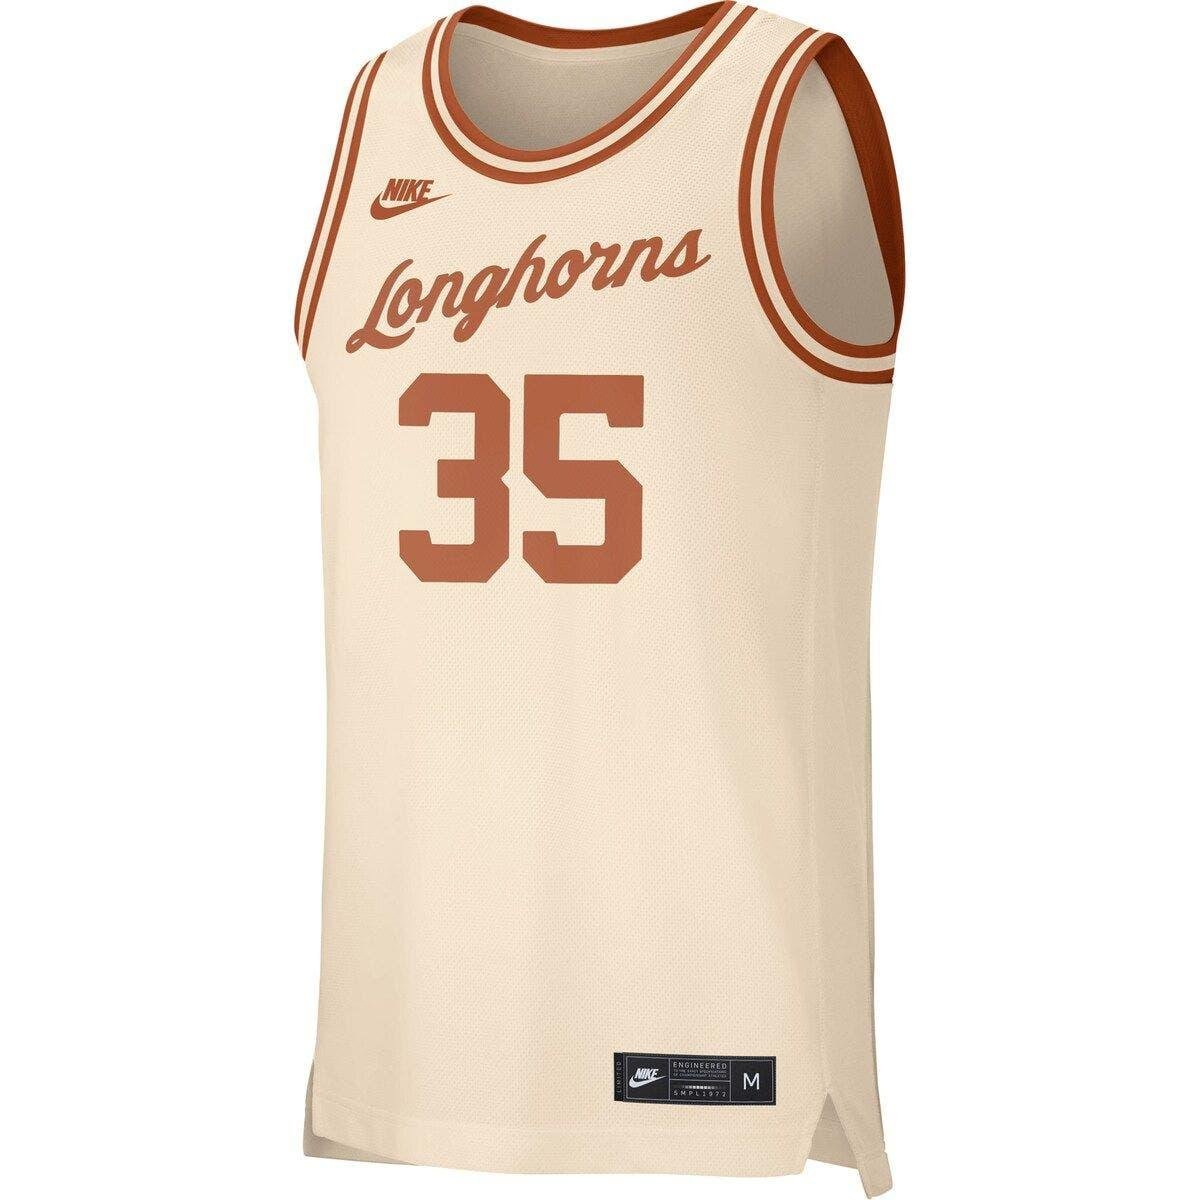 University of Texas Long Horn Vantage Foot Locker Basketball Jersey Men's XL